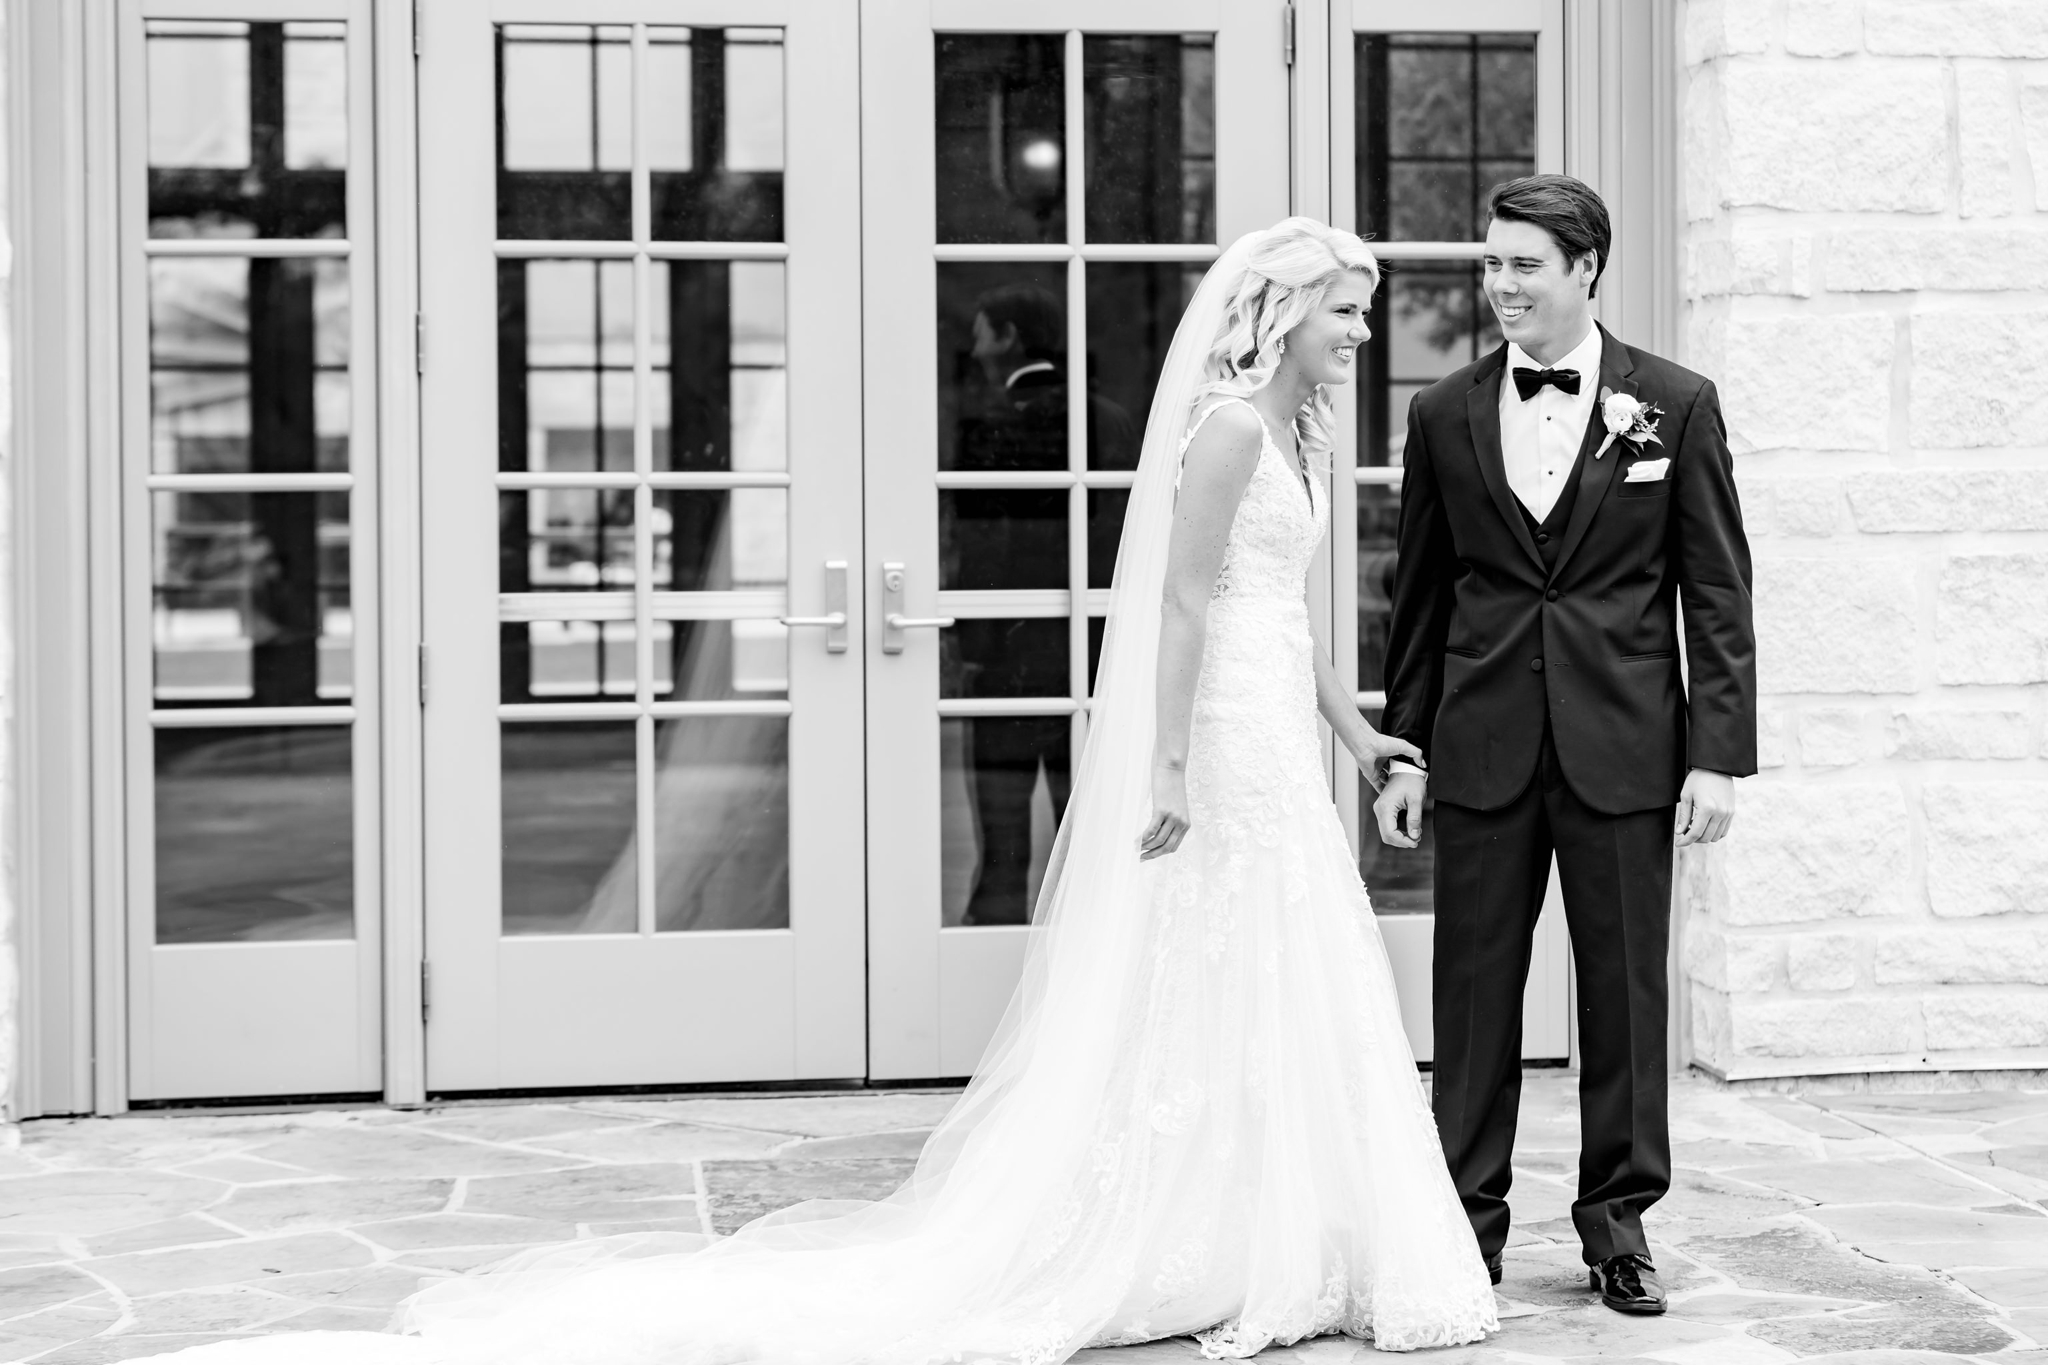 A Light Blue and Ivory Wedding at Hyatt Hill Country Resort in San Antonio, TX by Dawn Elizabeth Studios, San Antonio Wedding Photographer